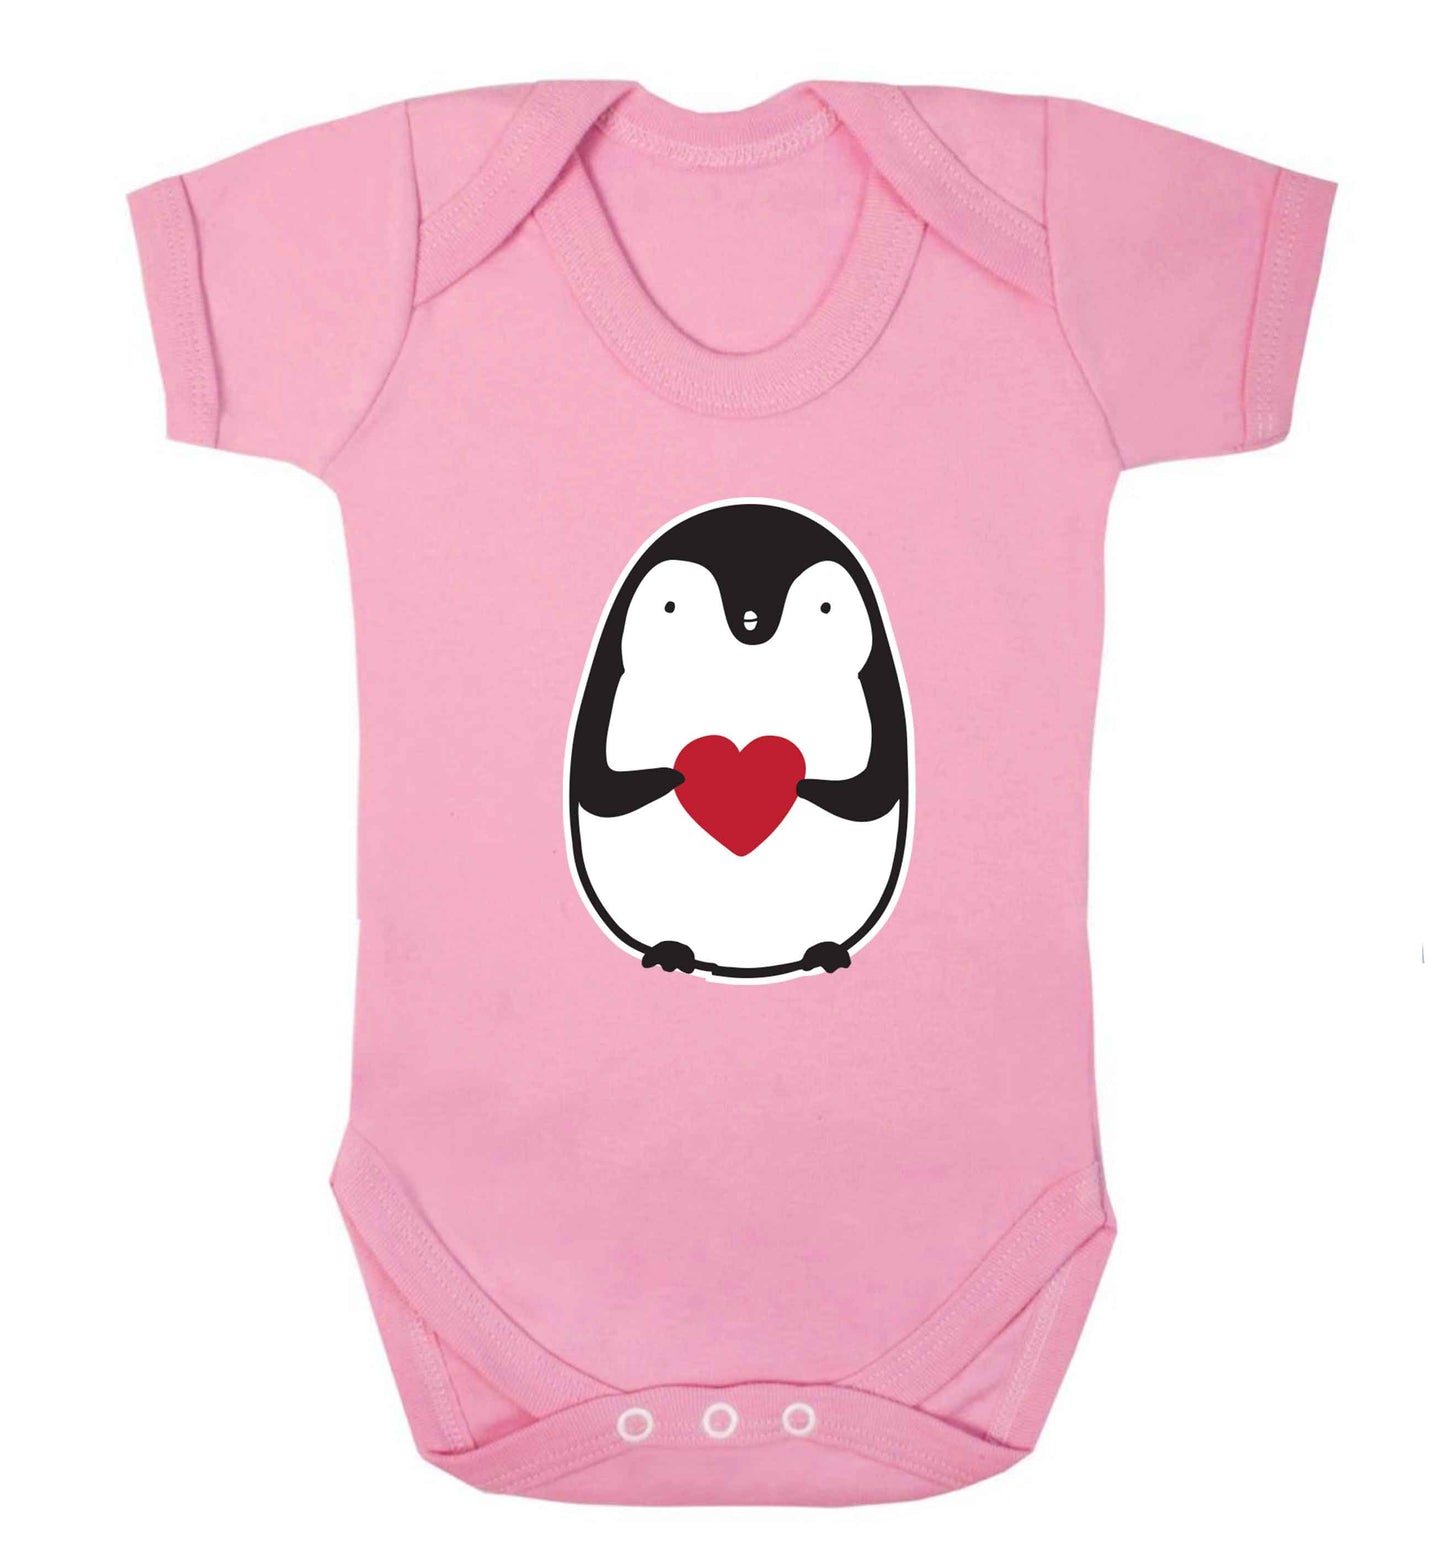 Cute penguin heart baby vest pale pink 18-24 months